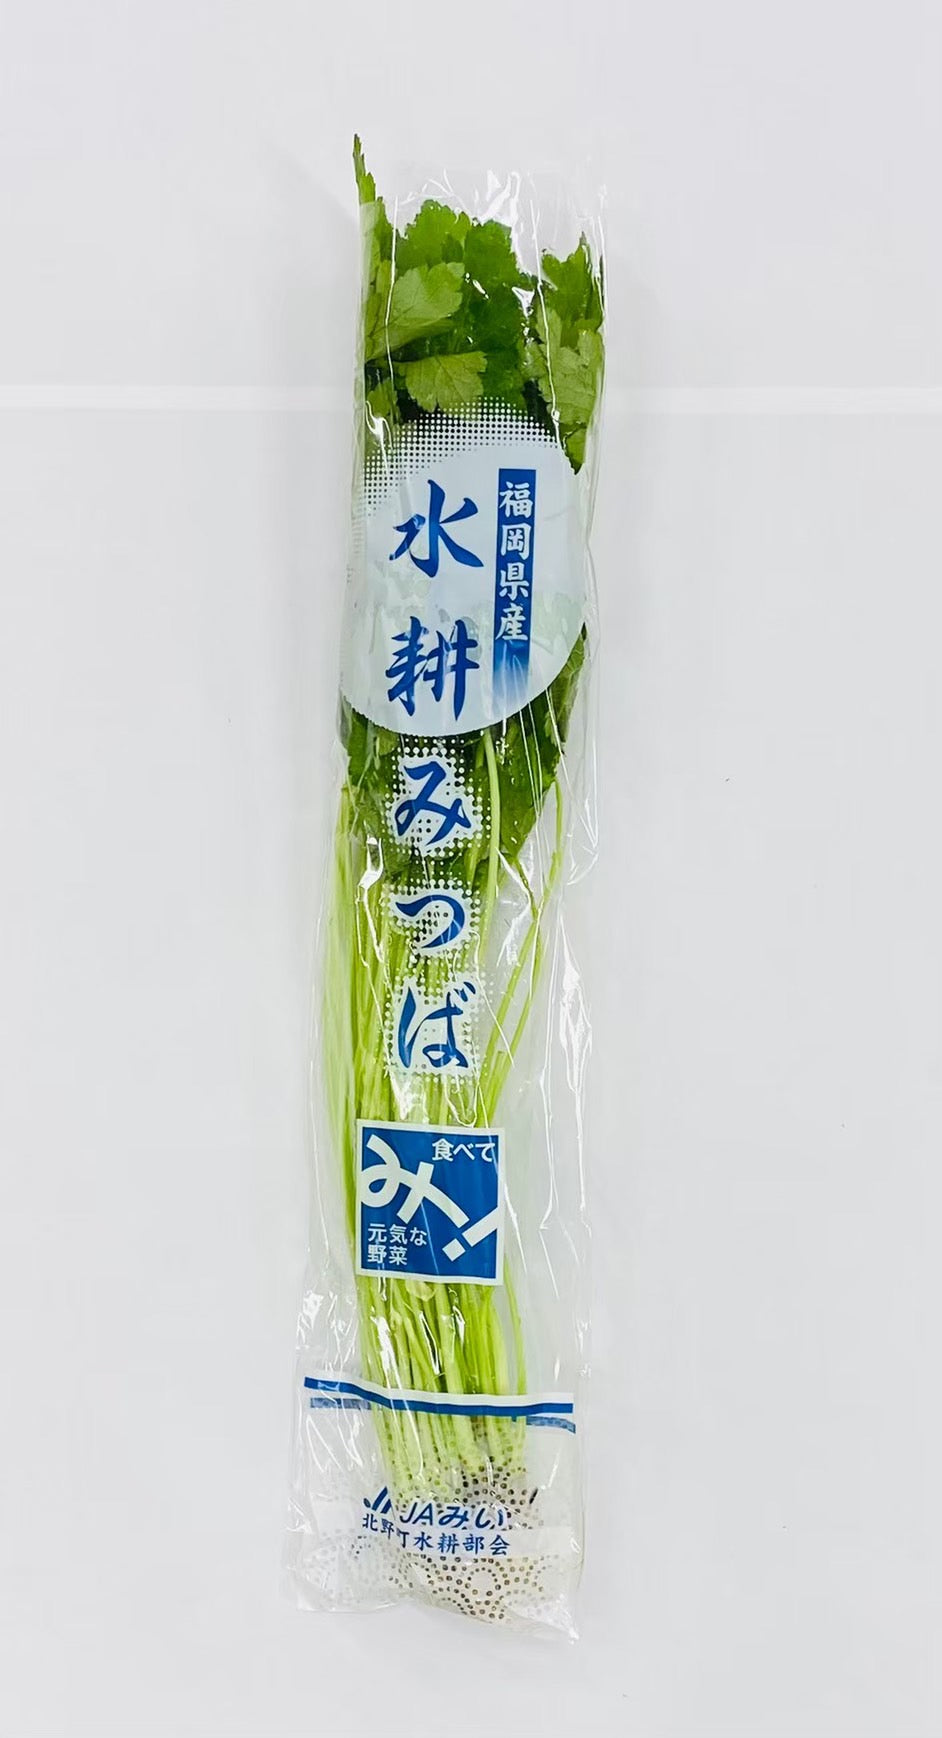 [Verduras de aniversario] Mitsuba (bolsa) 75 g x 10 bolsas (capacidad 750 g)